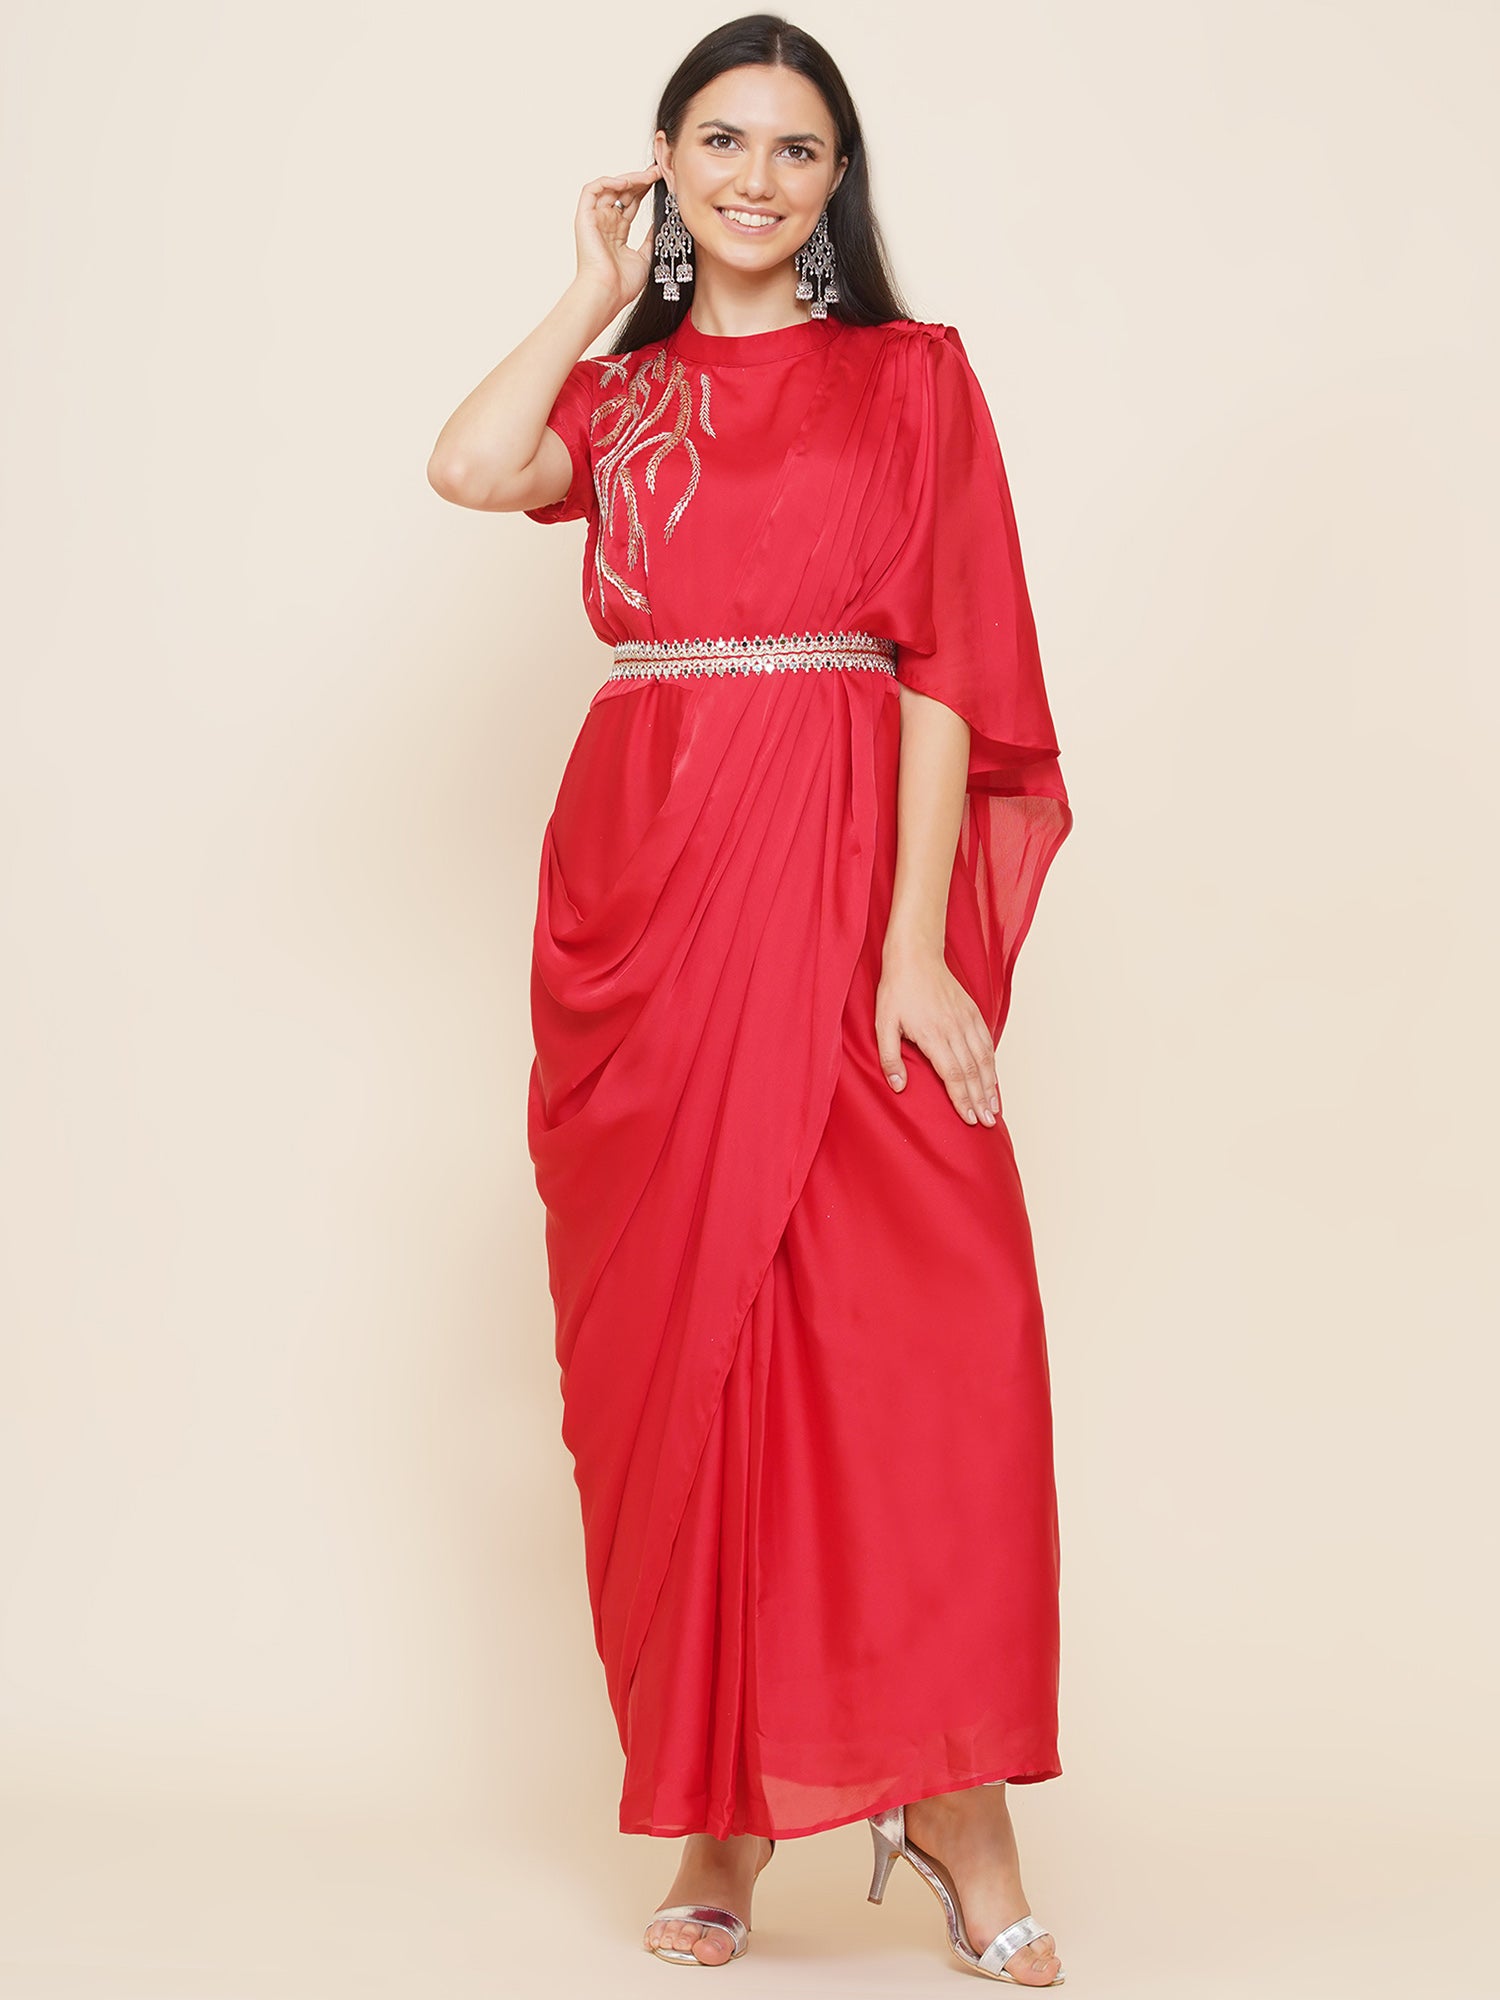 Maroon georgette dress by Kundavai | The Secret Label